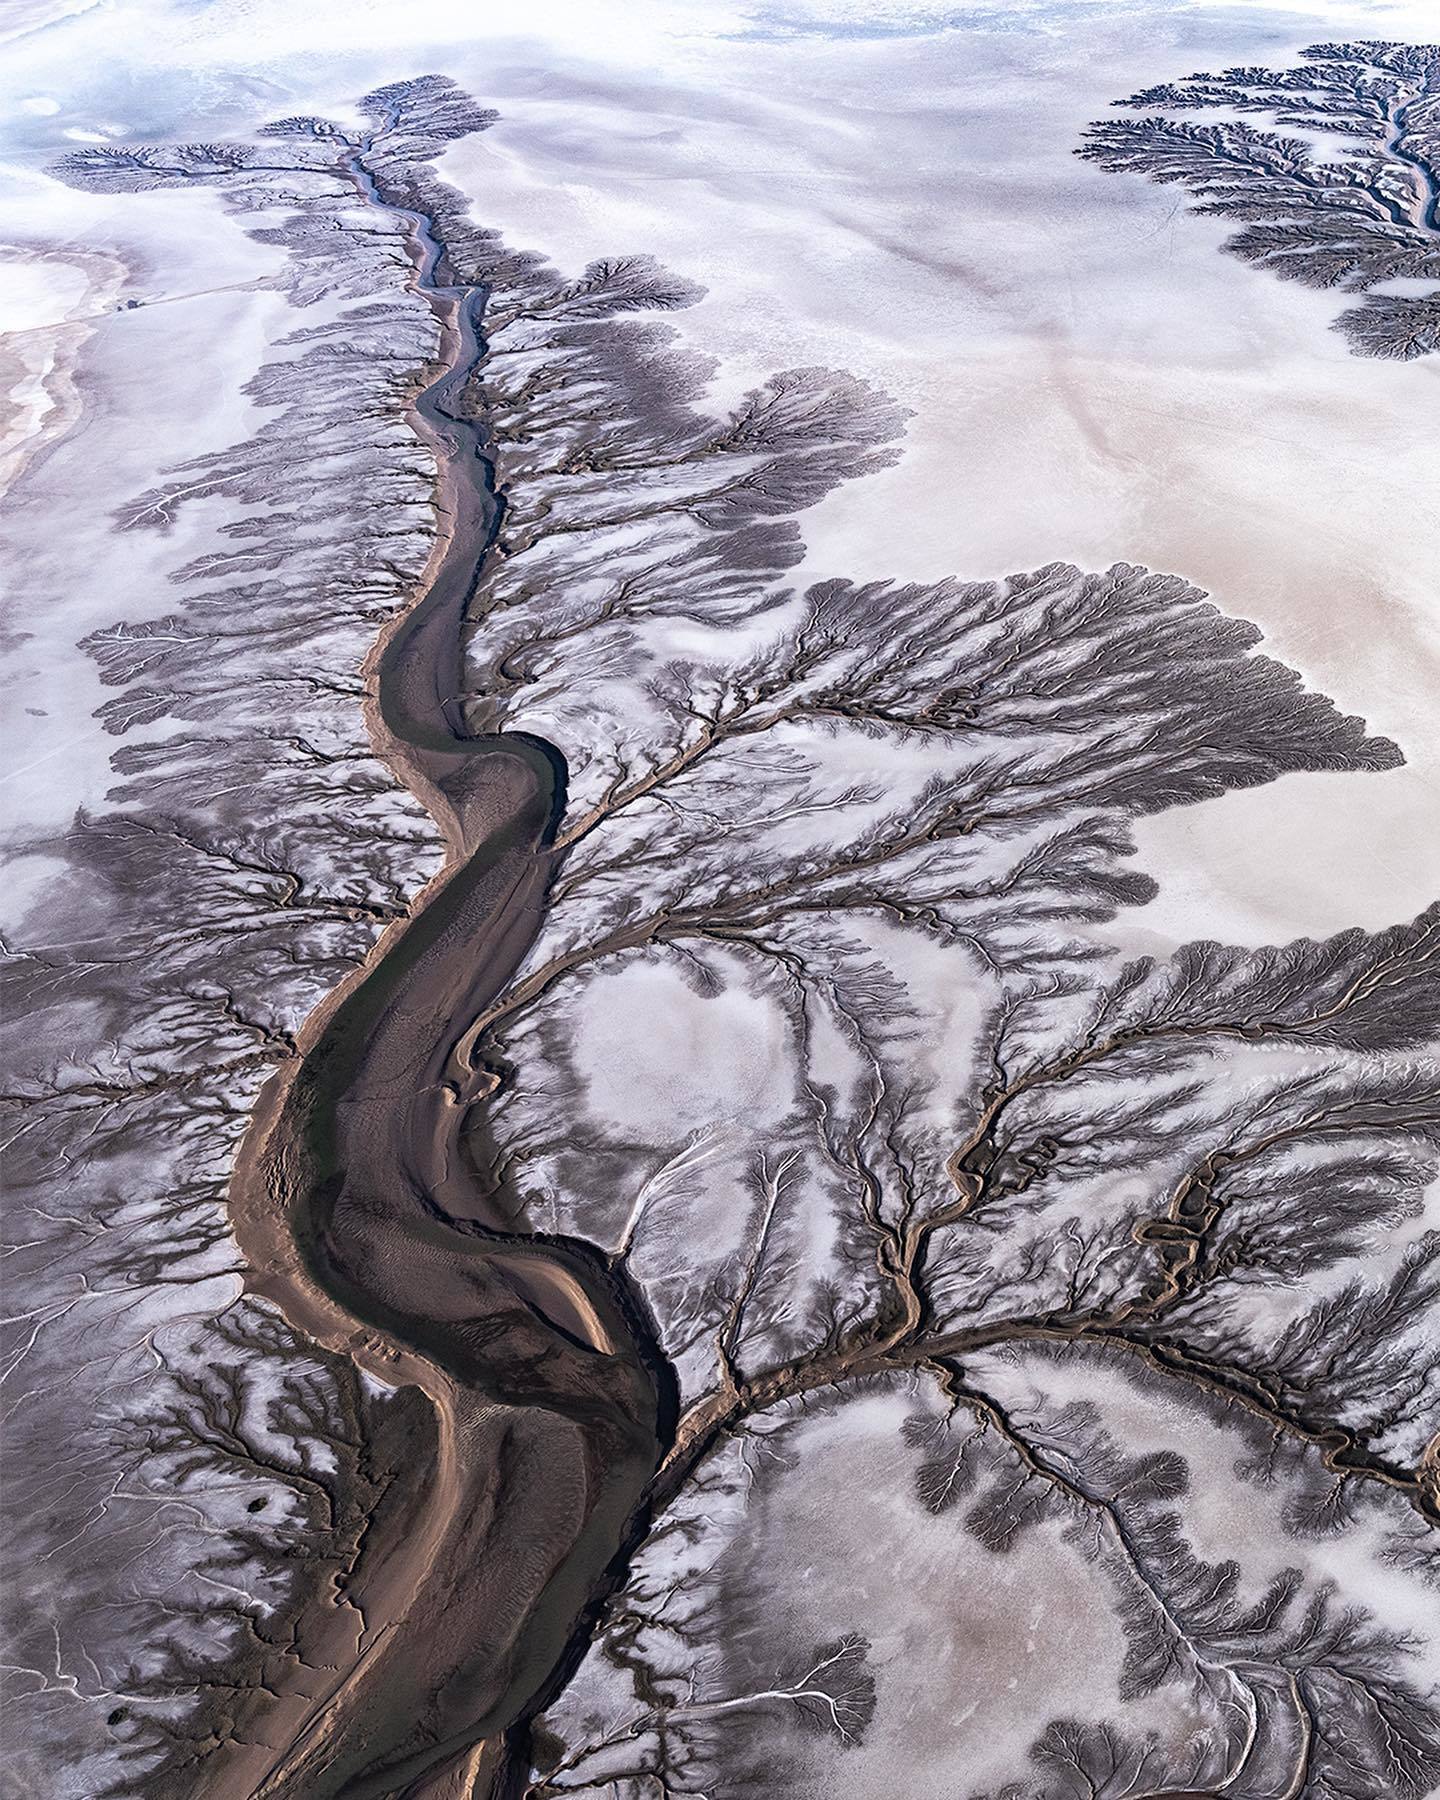  科罗拉多河，来自摄影师Paul Nicklen。 